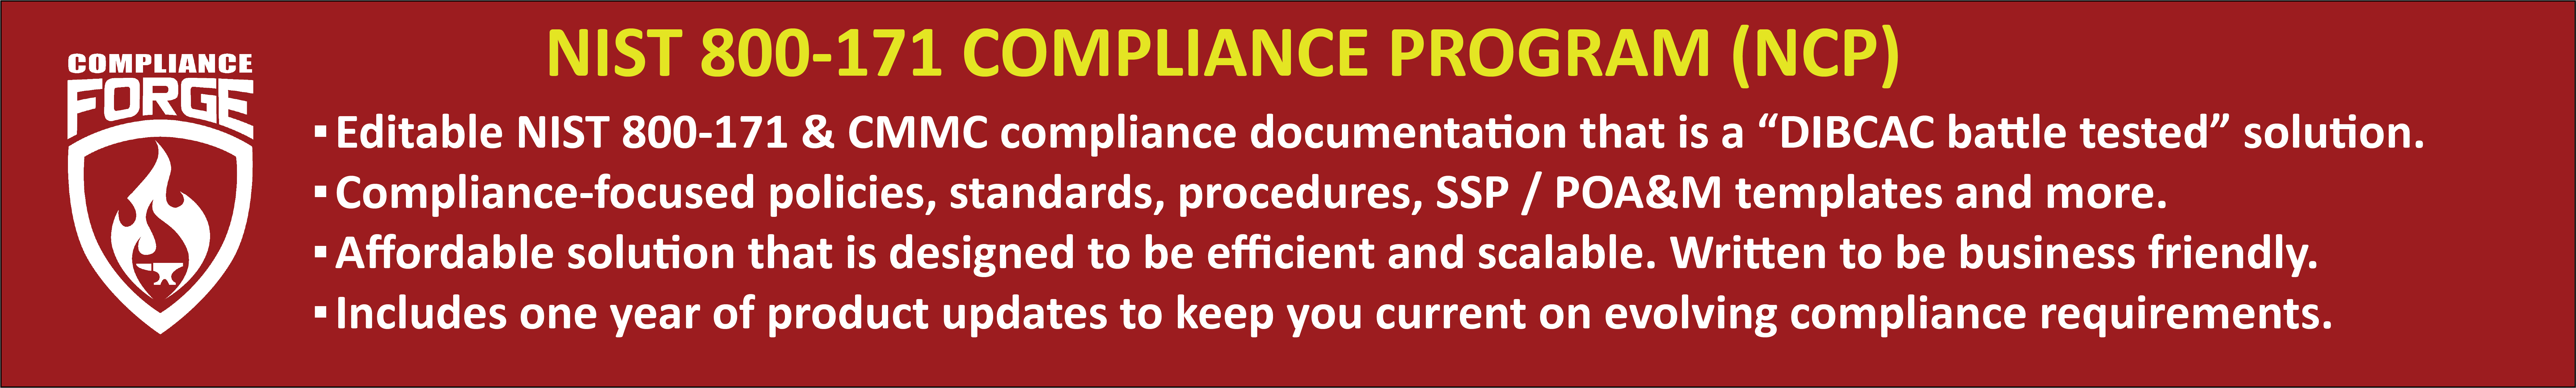 nist 800-171 & cmmc policies standards procedures compliance template documentation